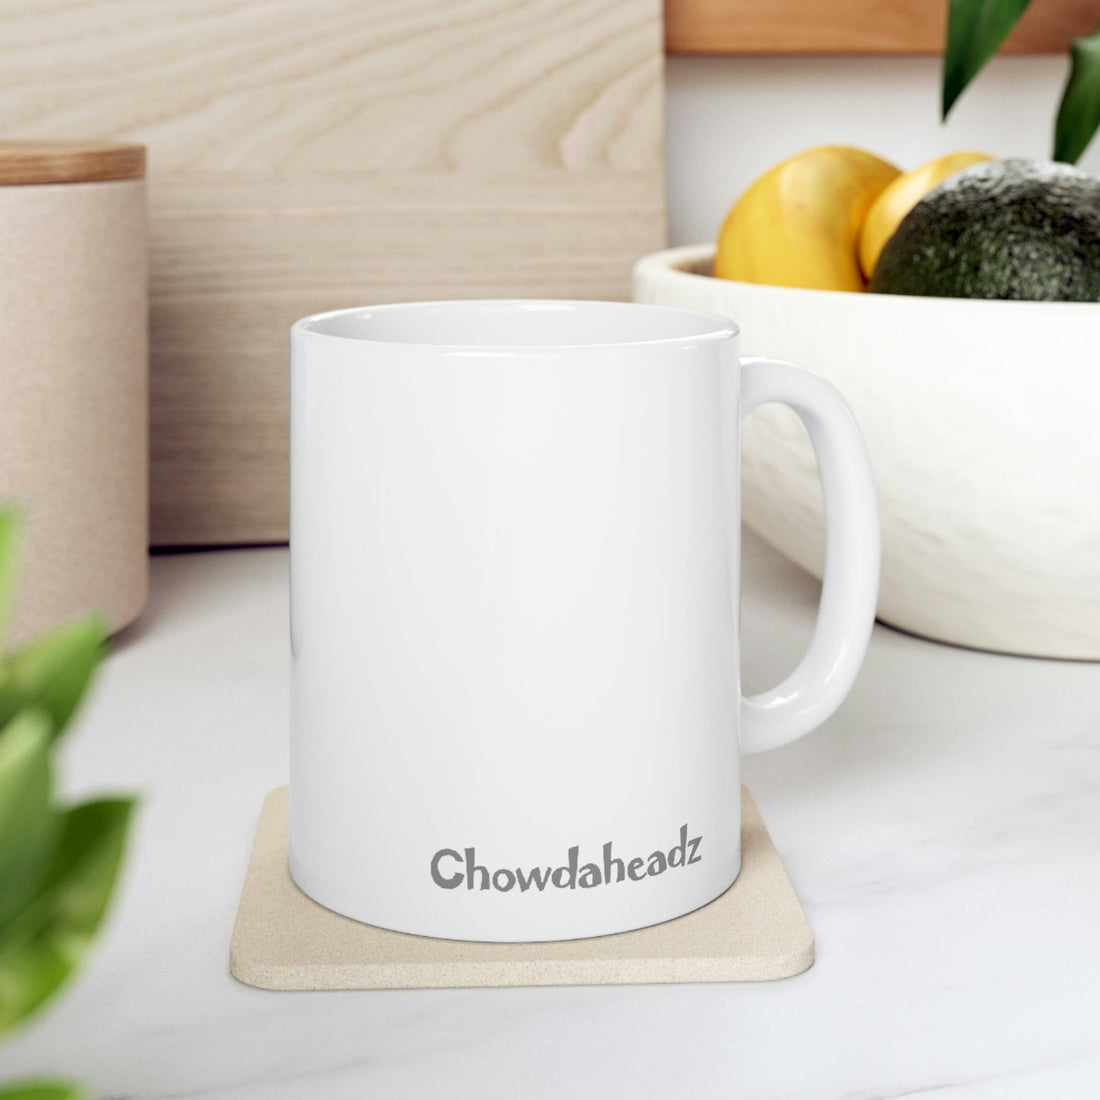 The Commonwealth of Massachusetts 11oz Coffee Mug - Chowdaheadz